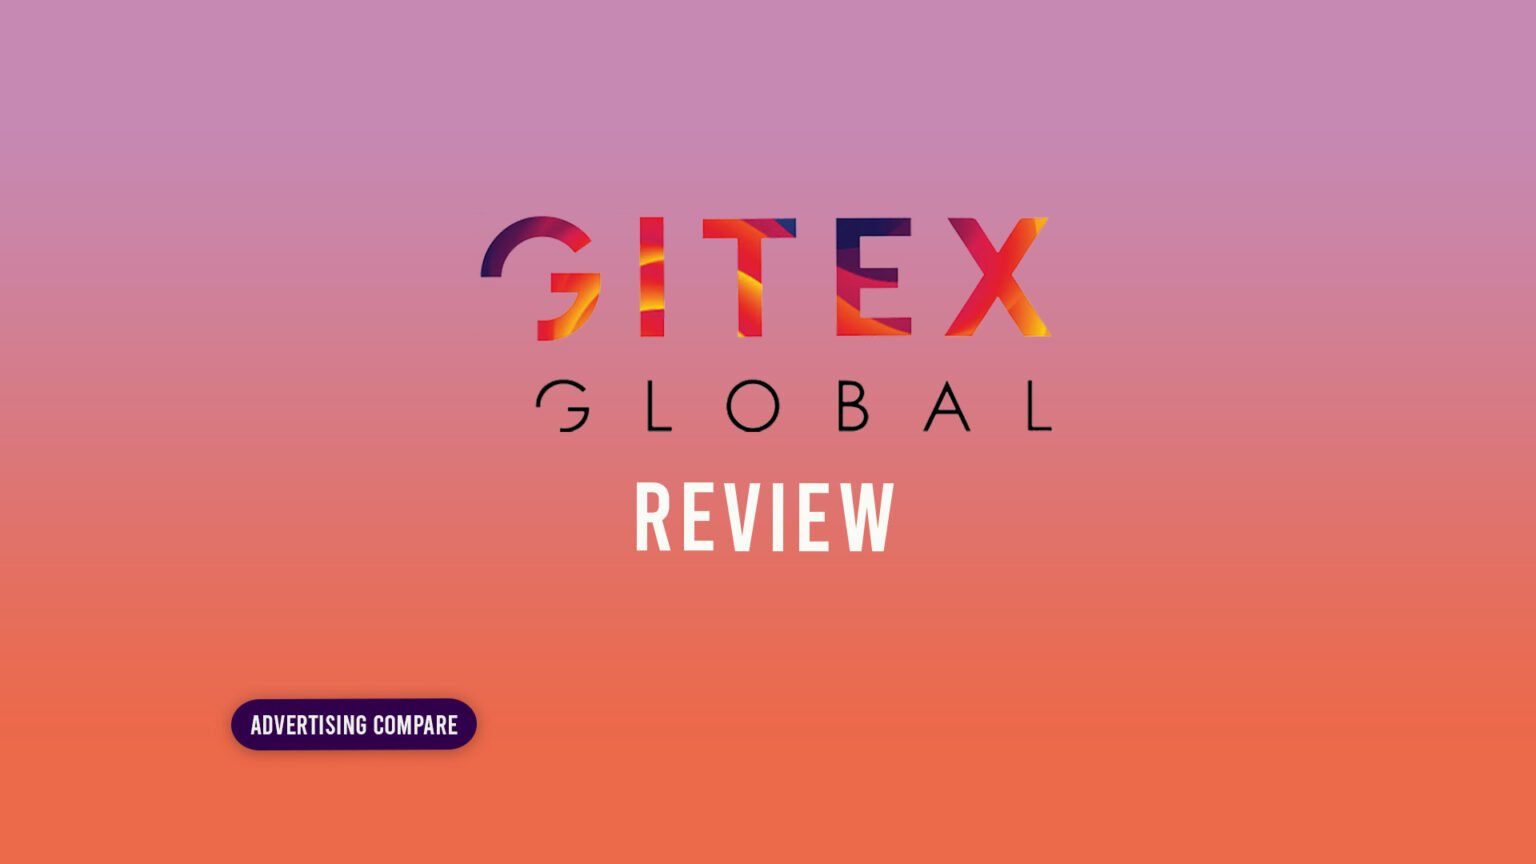 gitex global review www.theadcompare.com